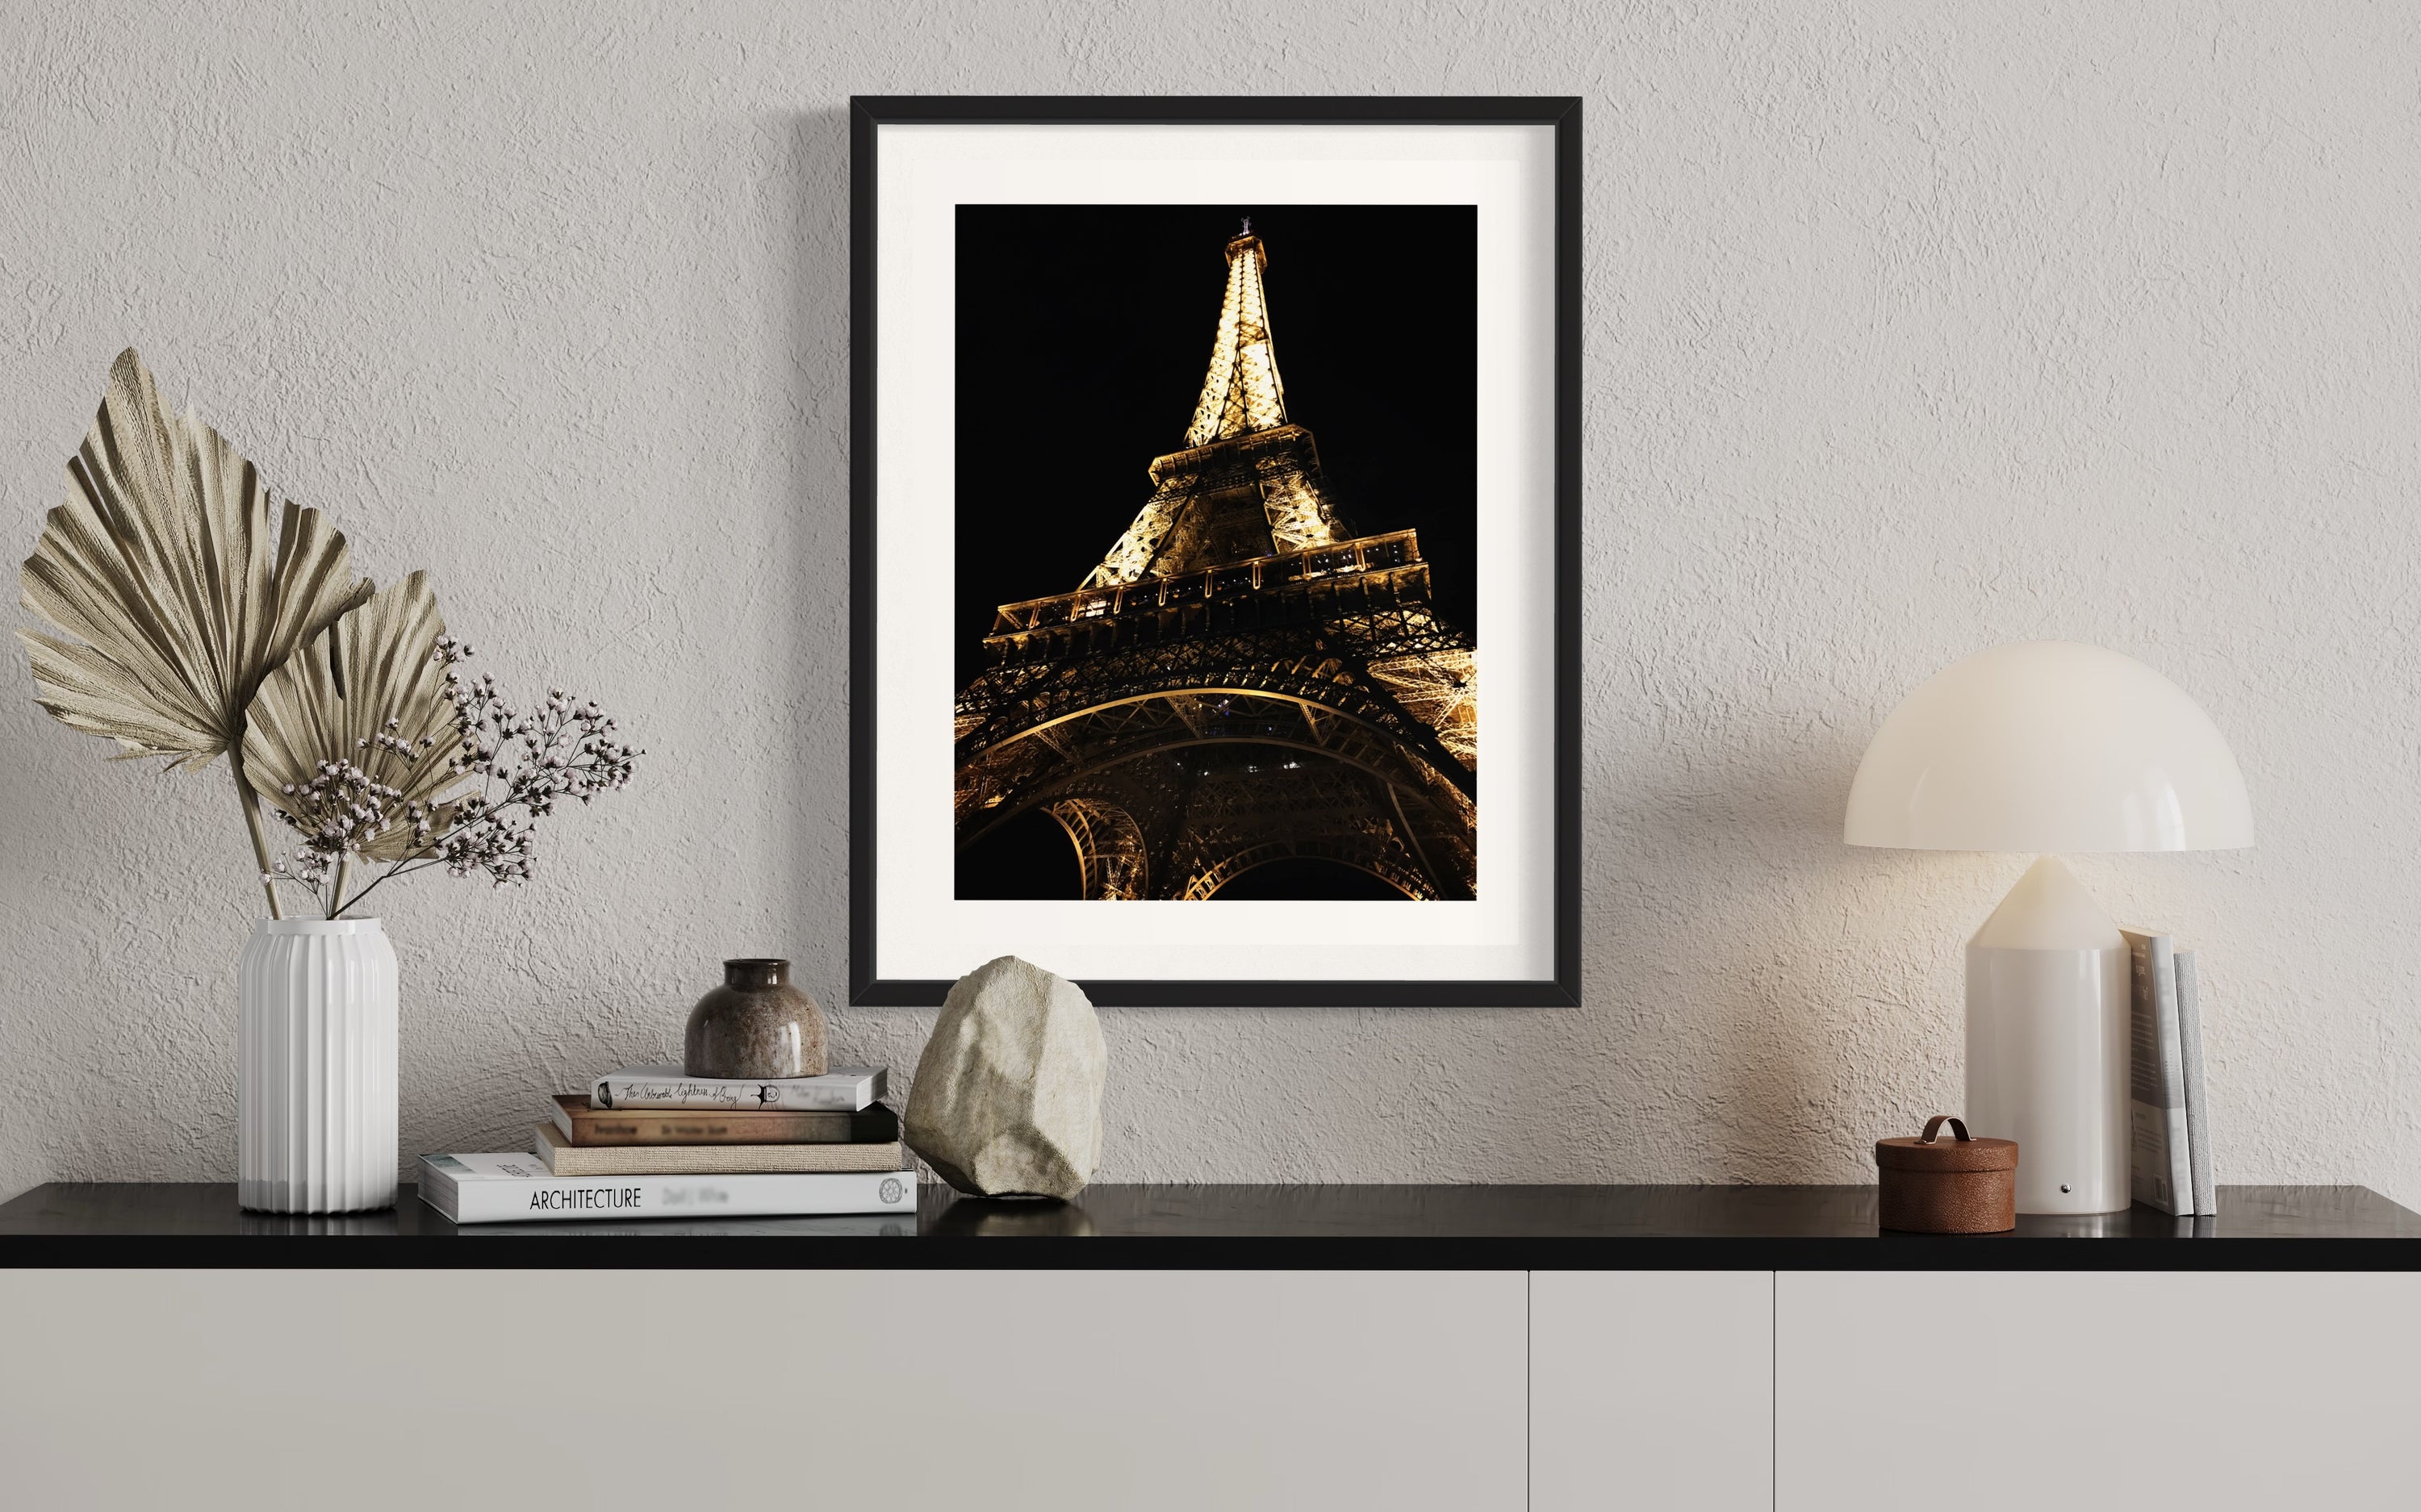 Eiffel Tower 1.0, Limited Edition Print